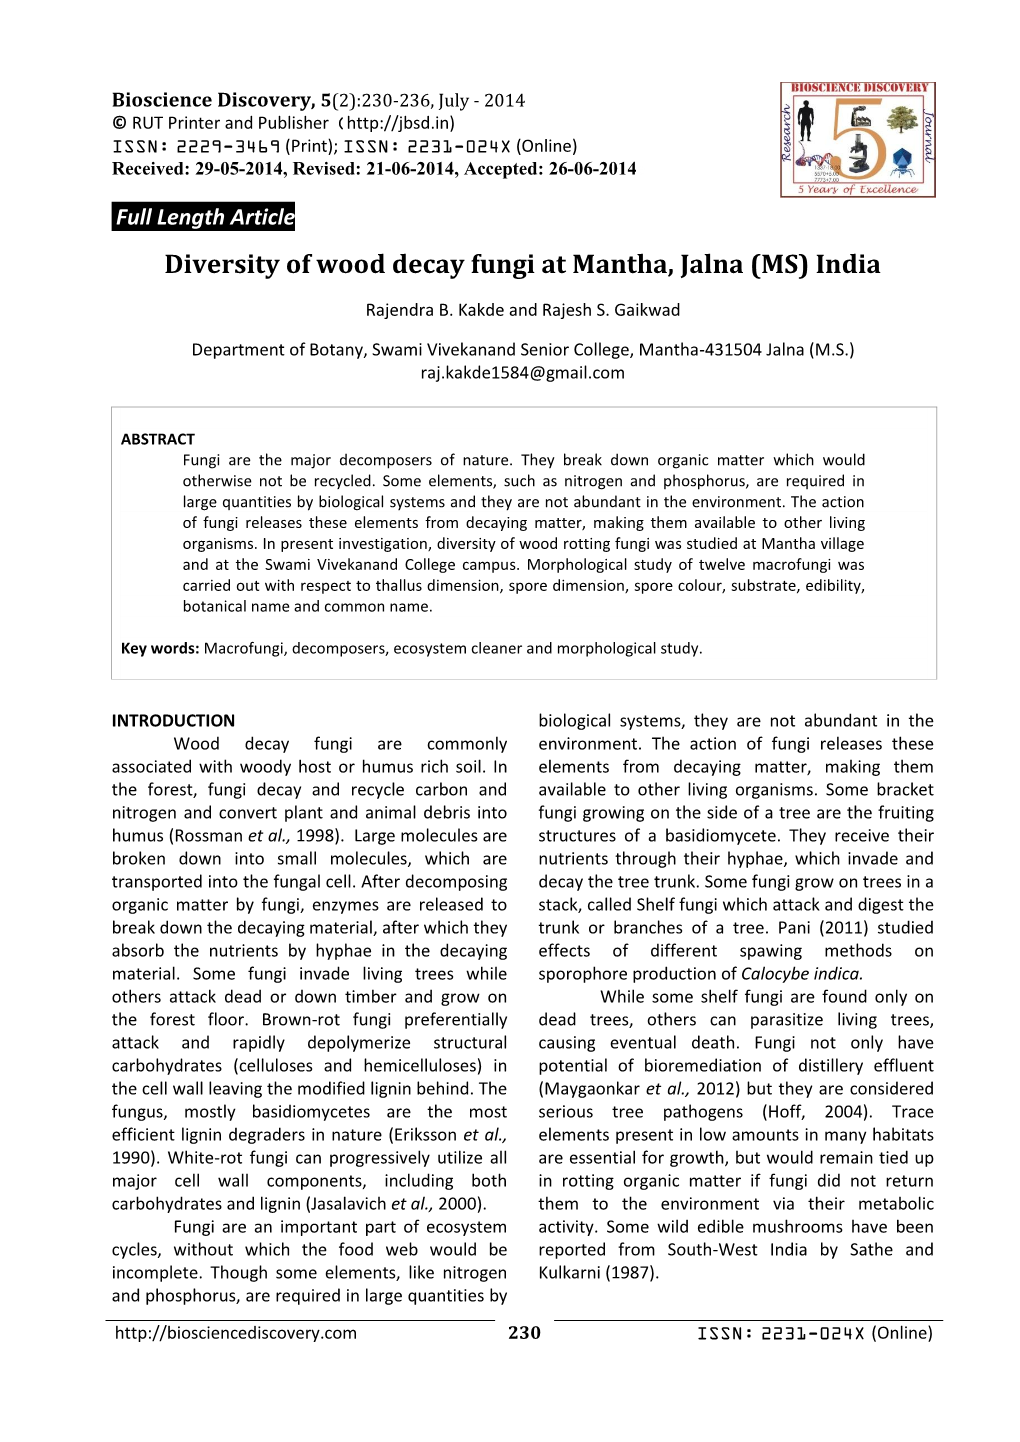 Diversity of Wood Decay Fungi at Mantha, Jalna (MS) India